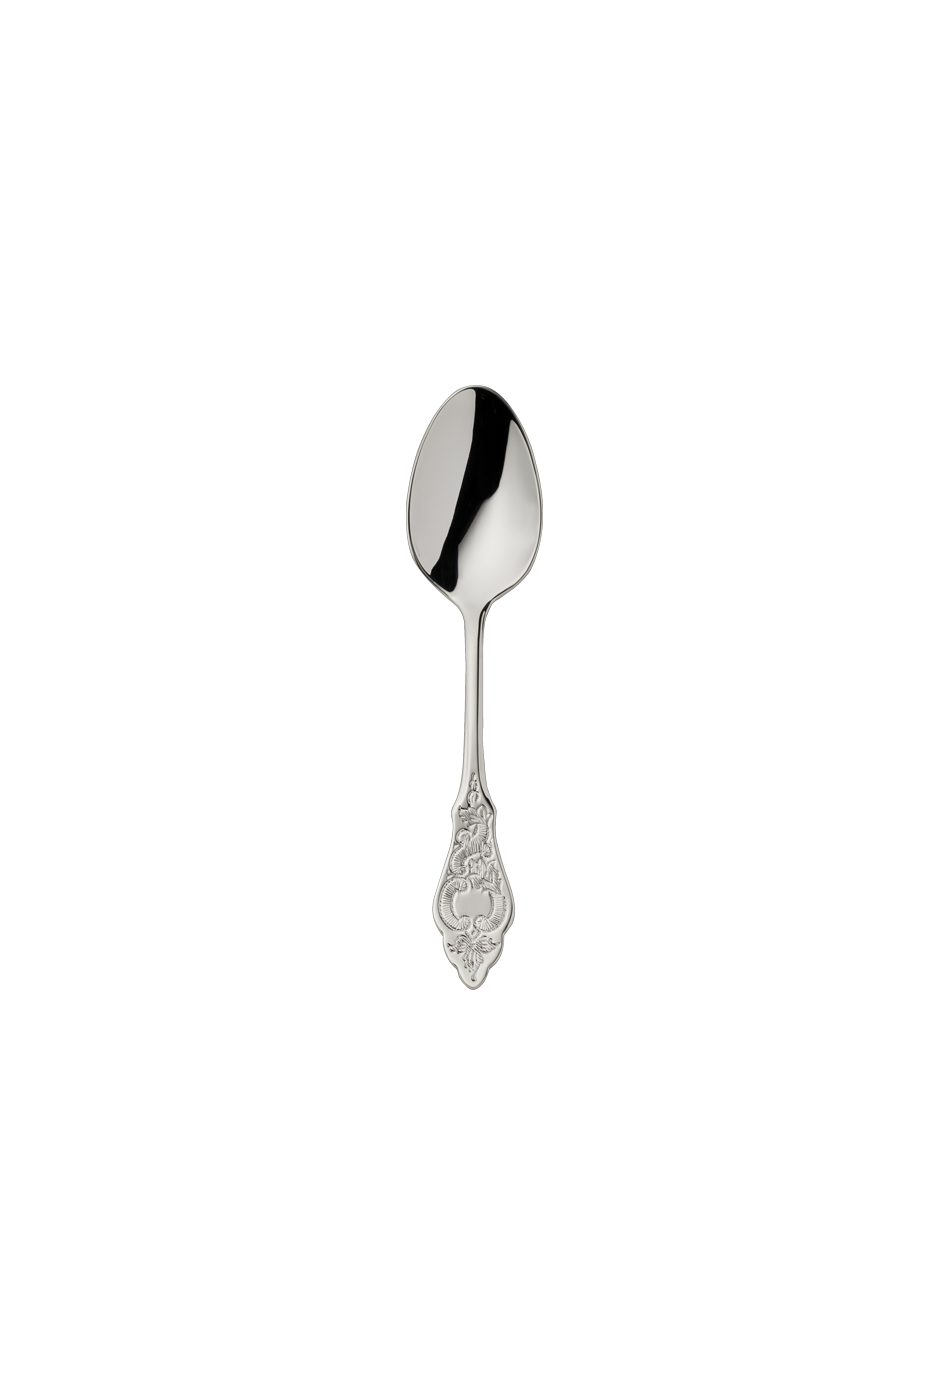 Ostfriesen Coffee Spoon 13,0 Cm (150g massive silverplated)